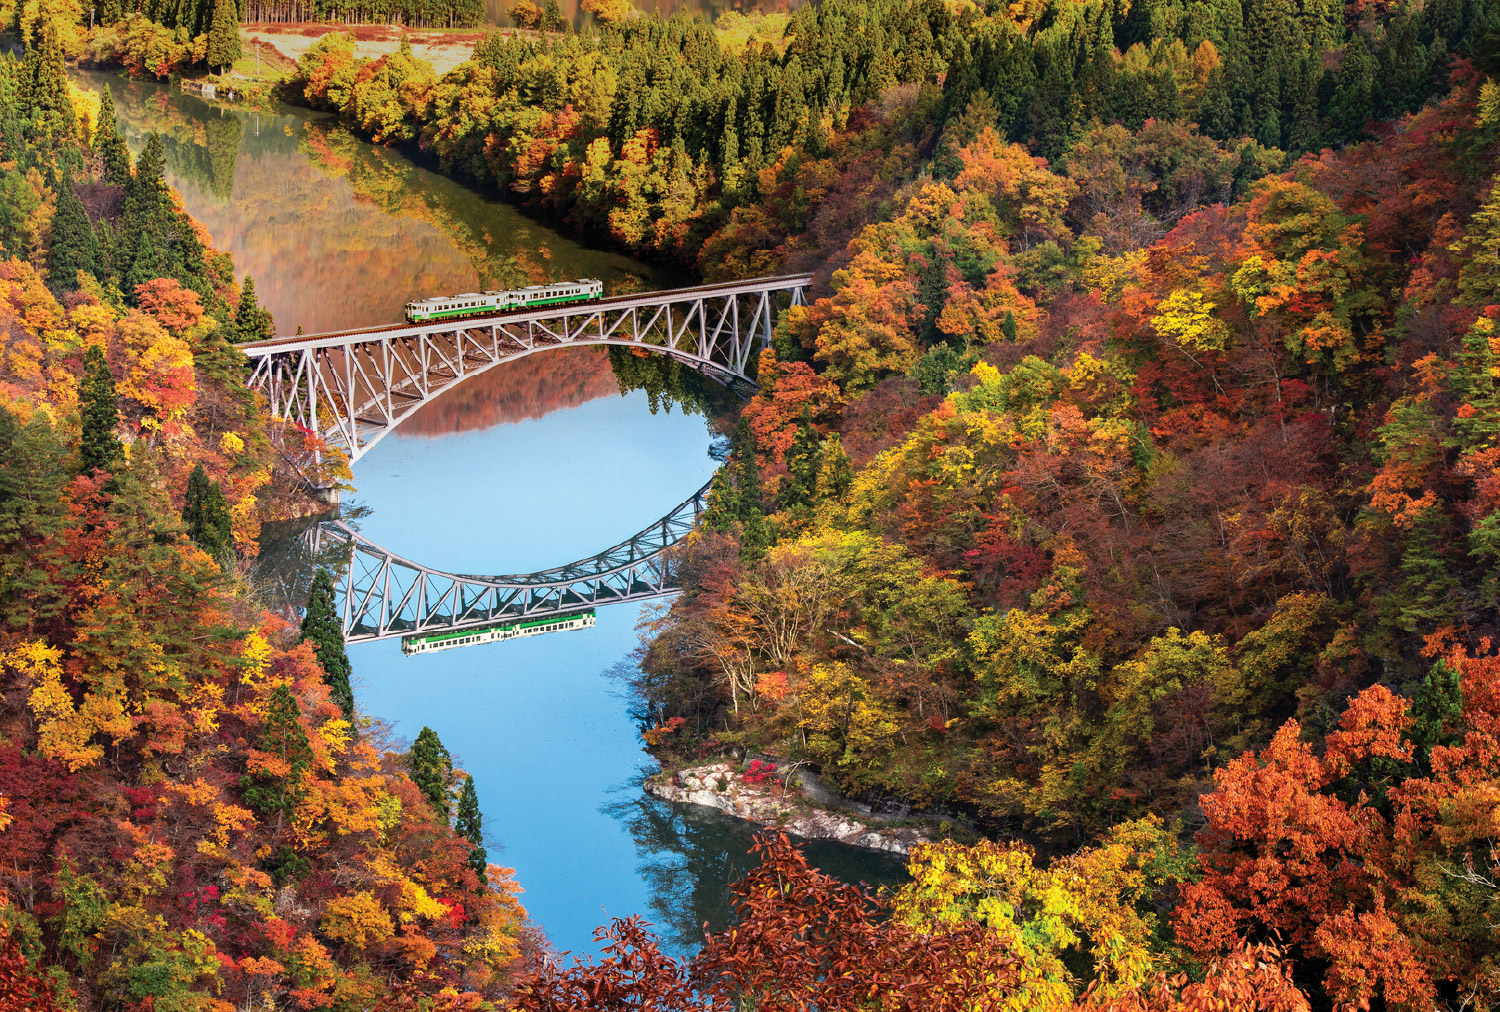 Tohoku Region Japan: The Gold List 2022 - Best Destination International